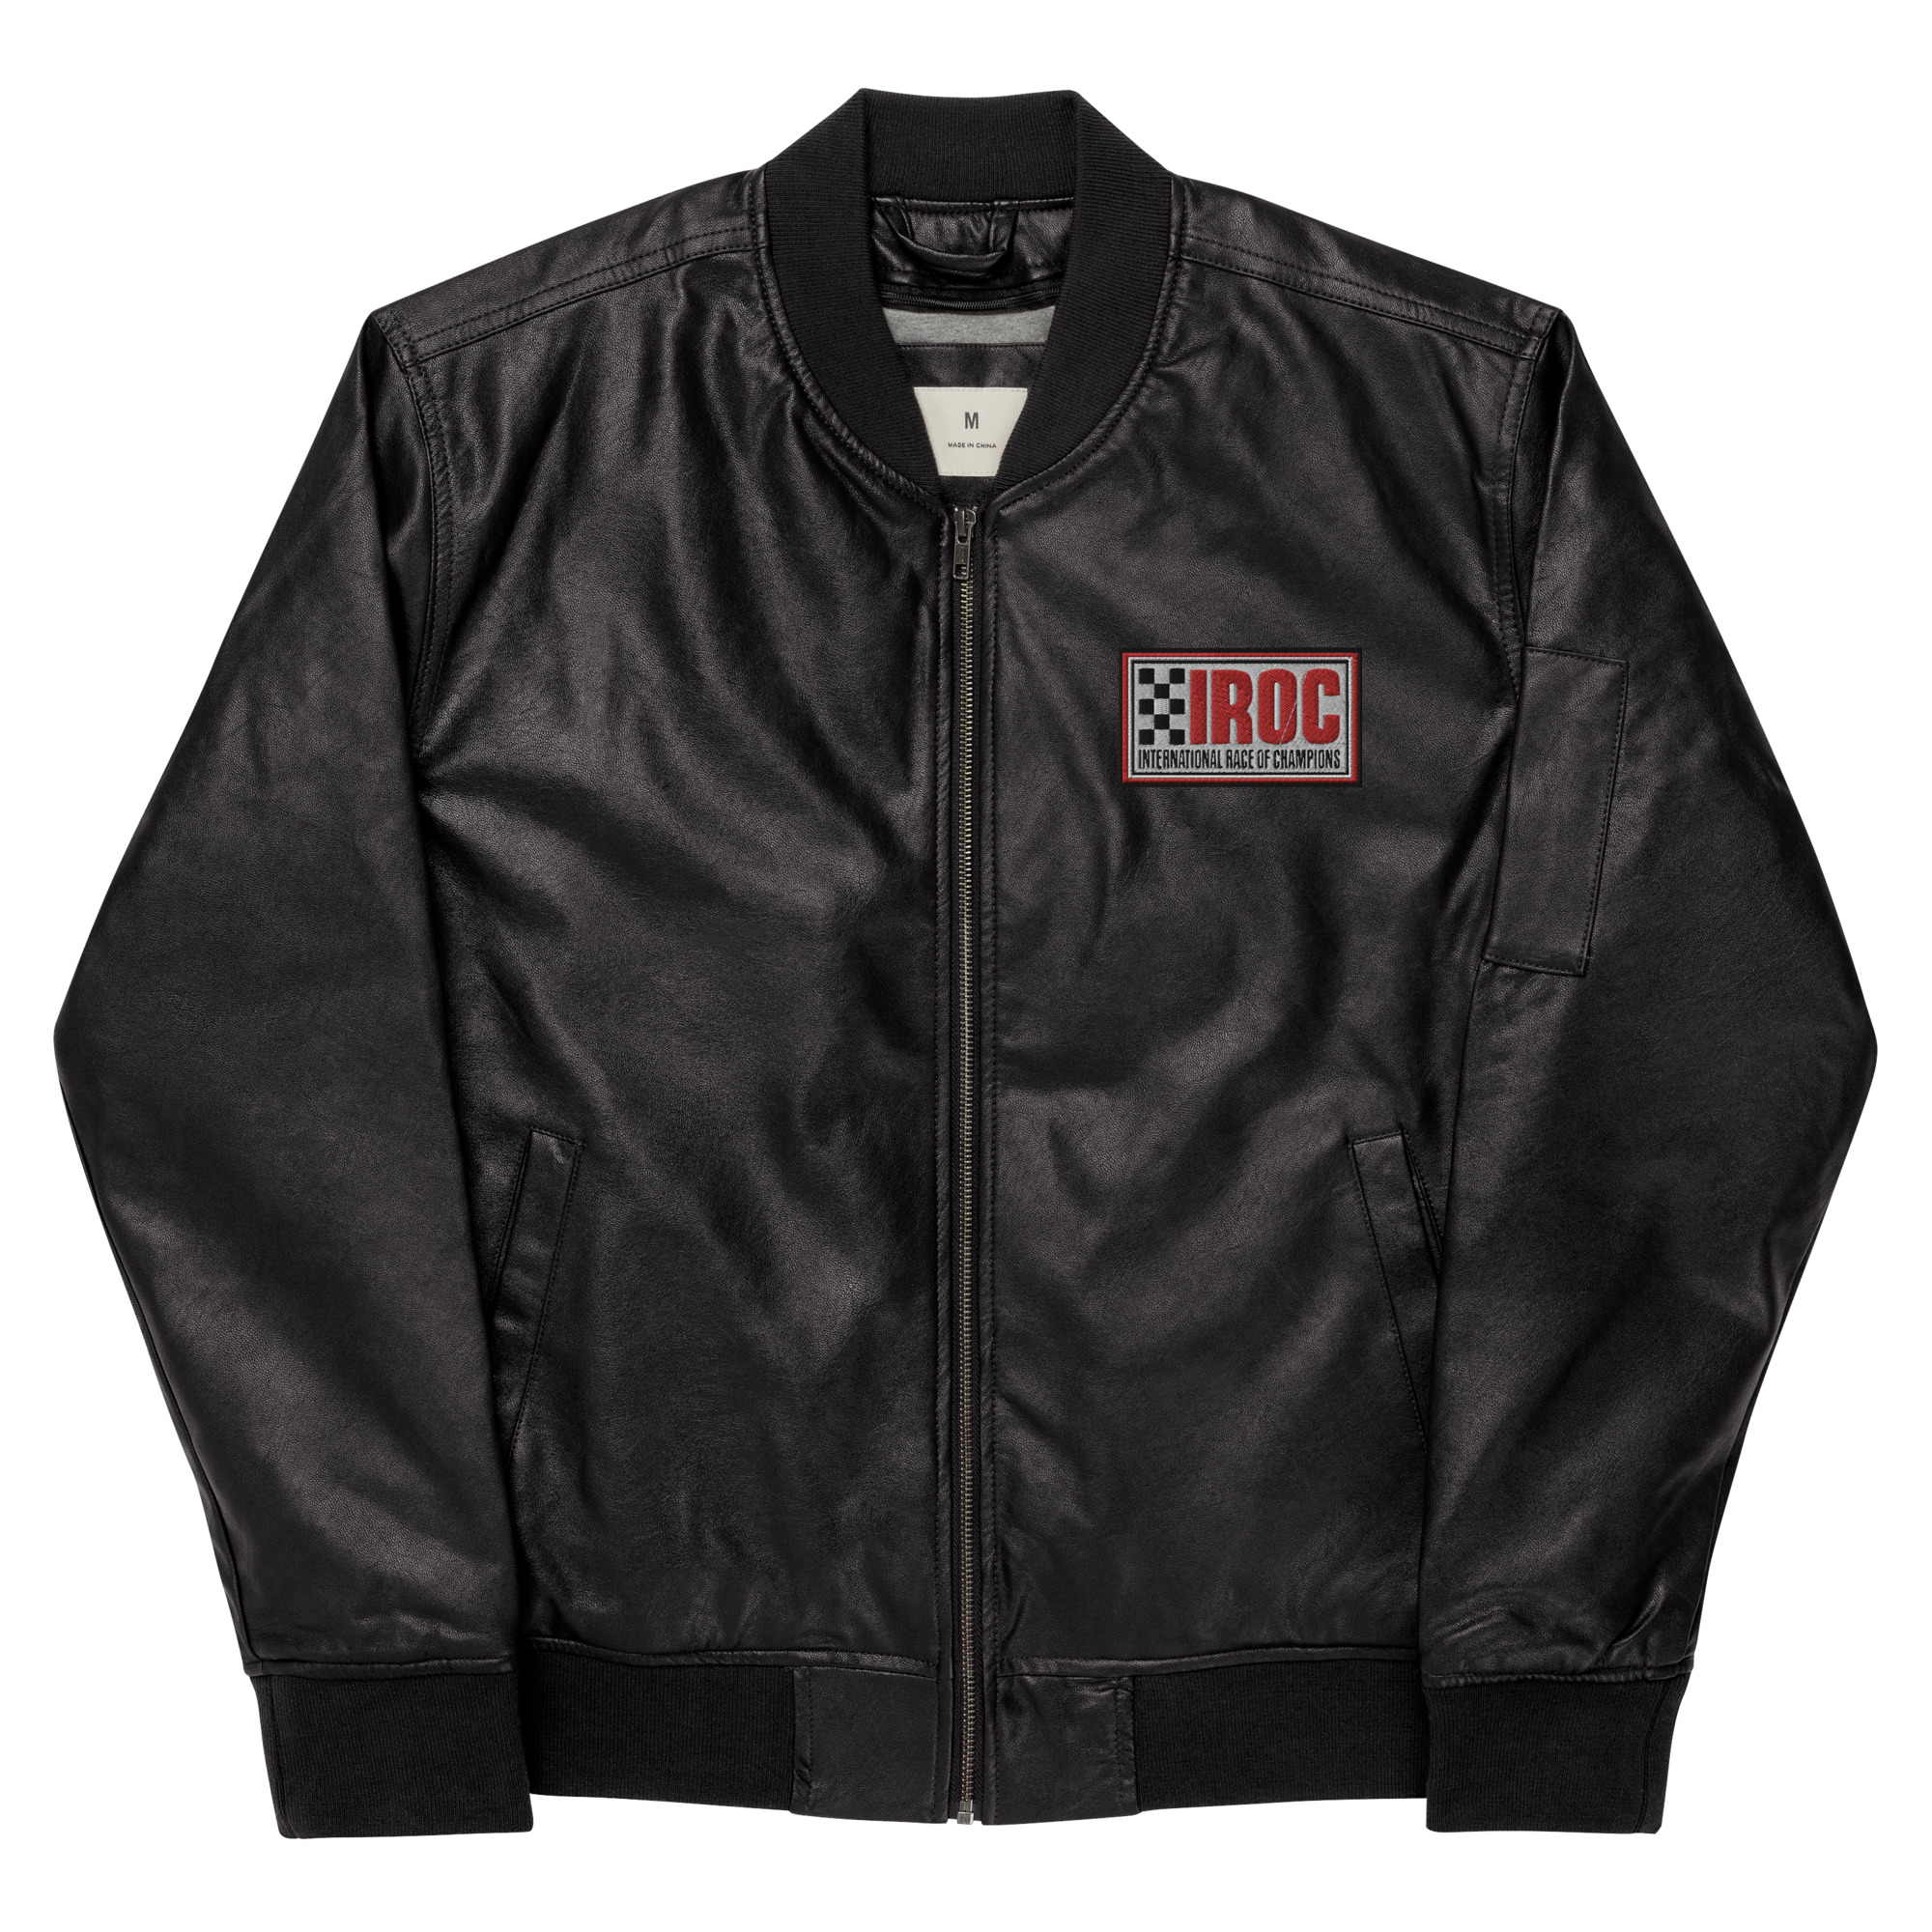 Racing faux leather jacket - Outerwear - Men